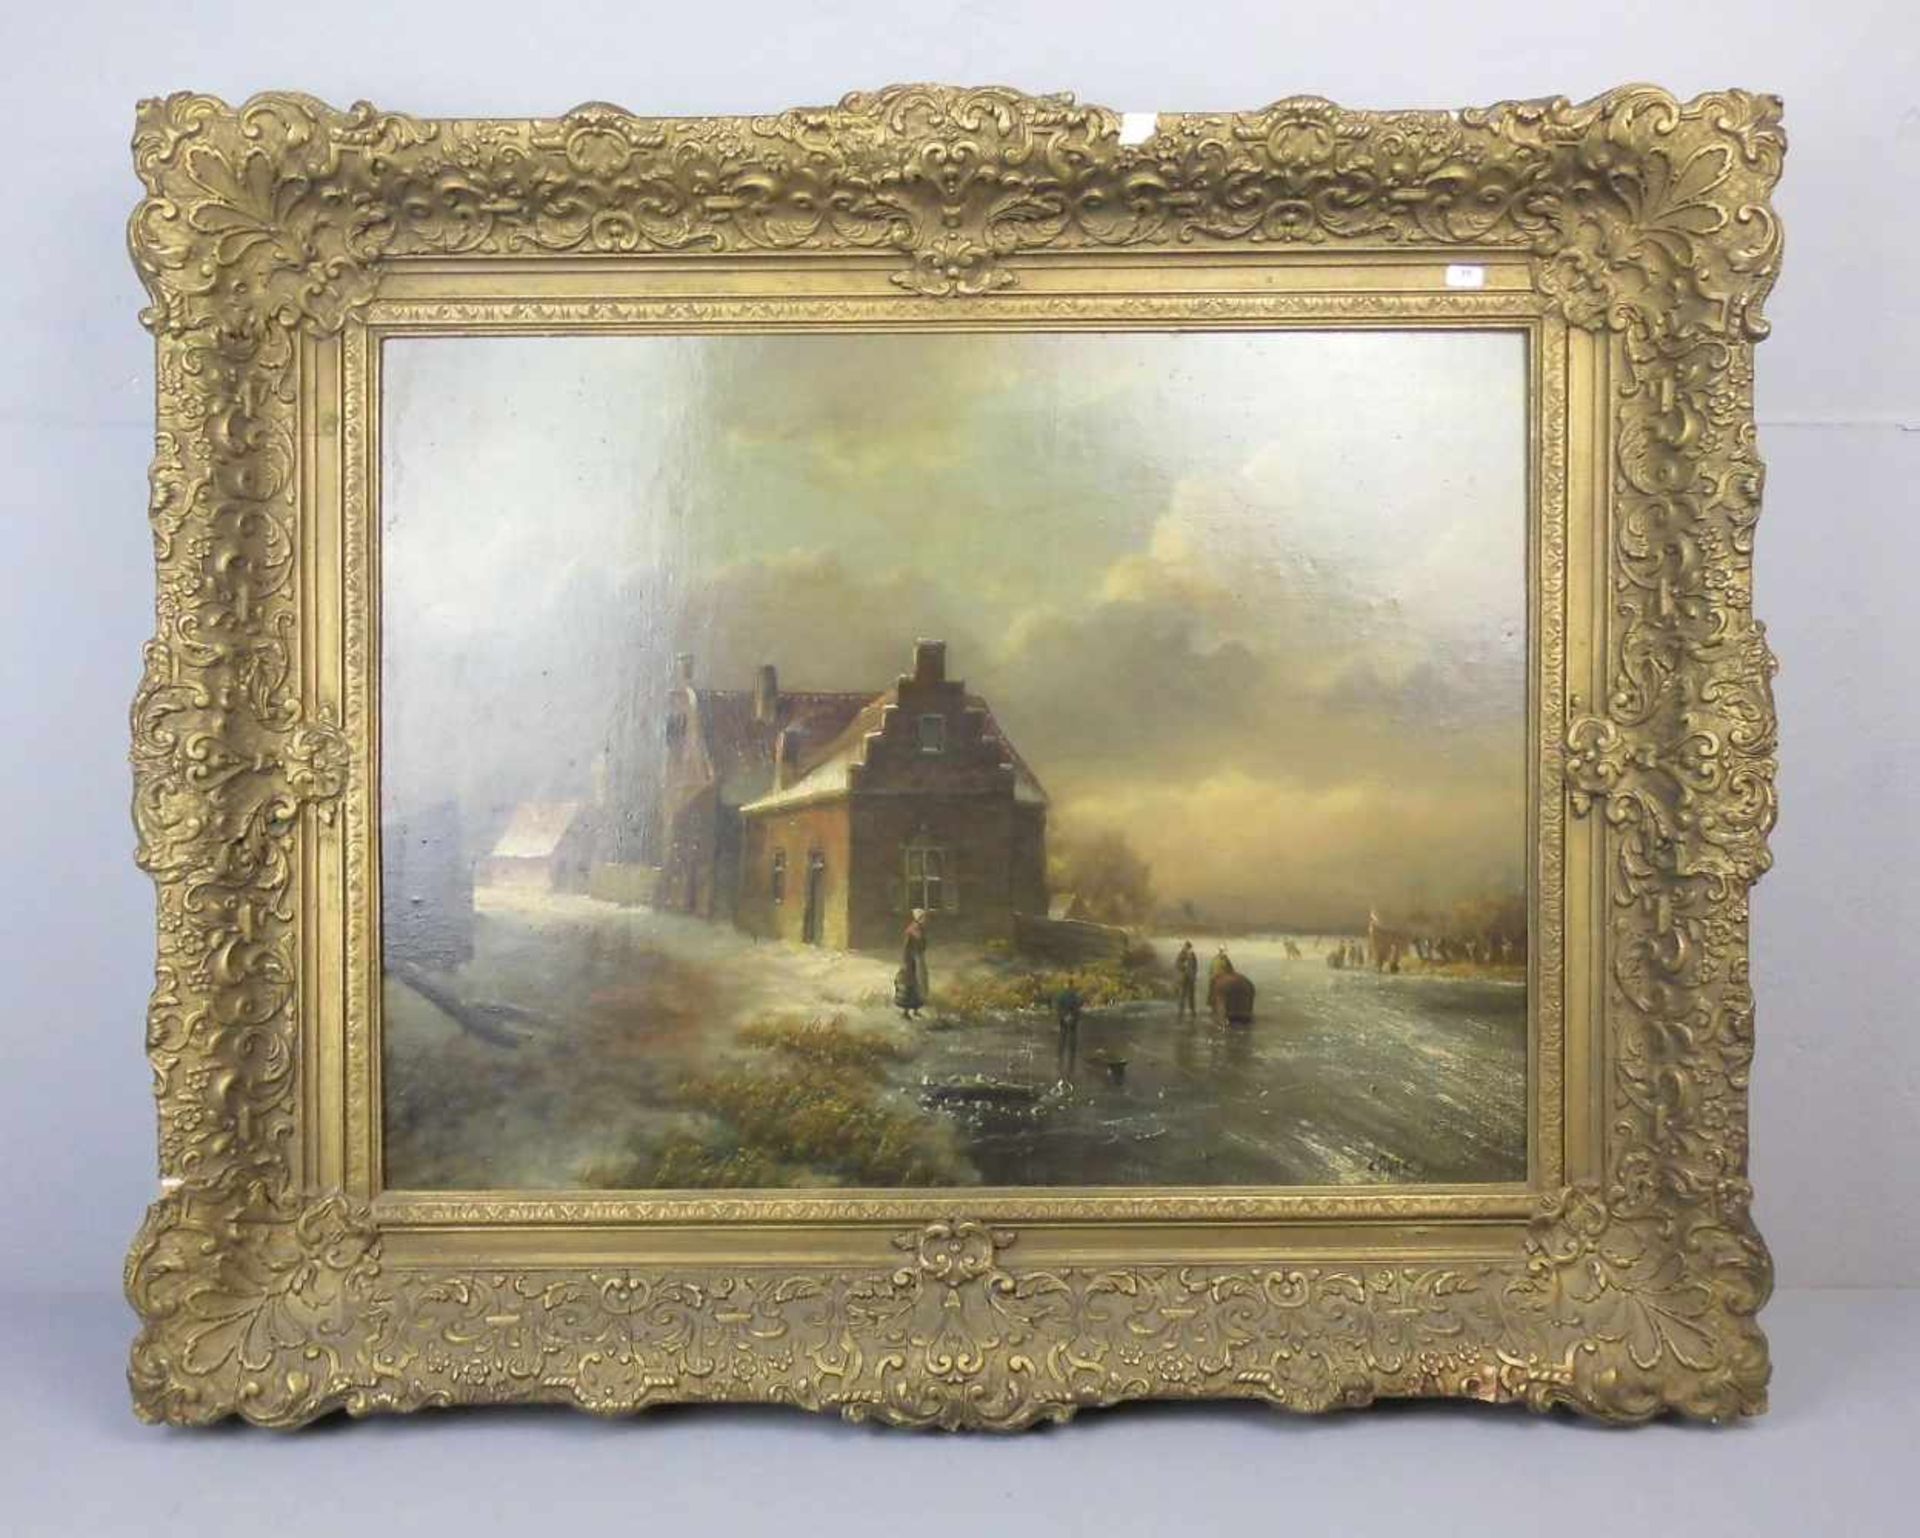 SPOHLER, JACOB JAN CONRAD (Amsterdam 1837-1922 ebd.), Gemälde / painting: "Winterlandschaft mit